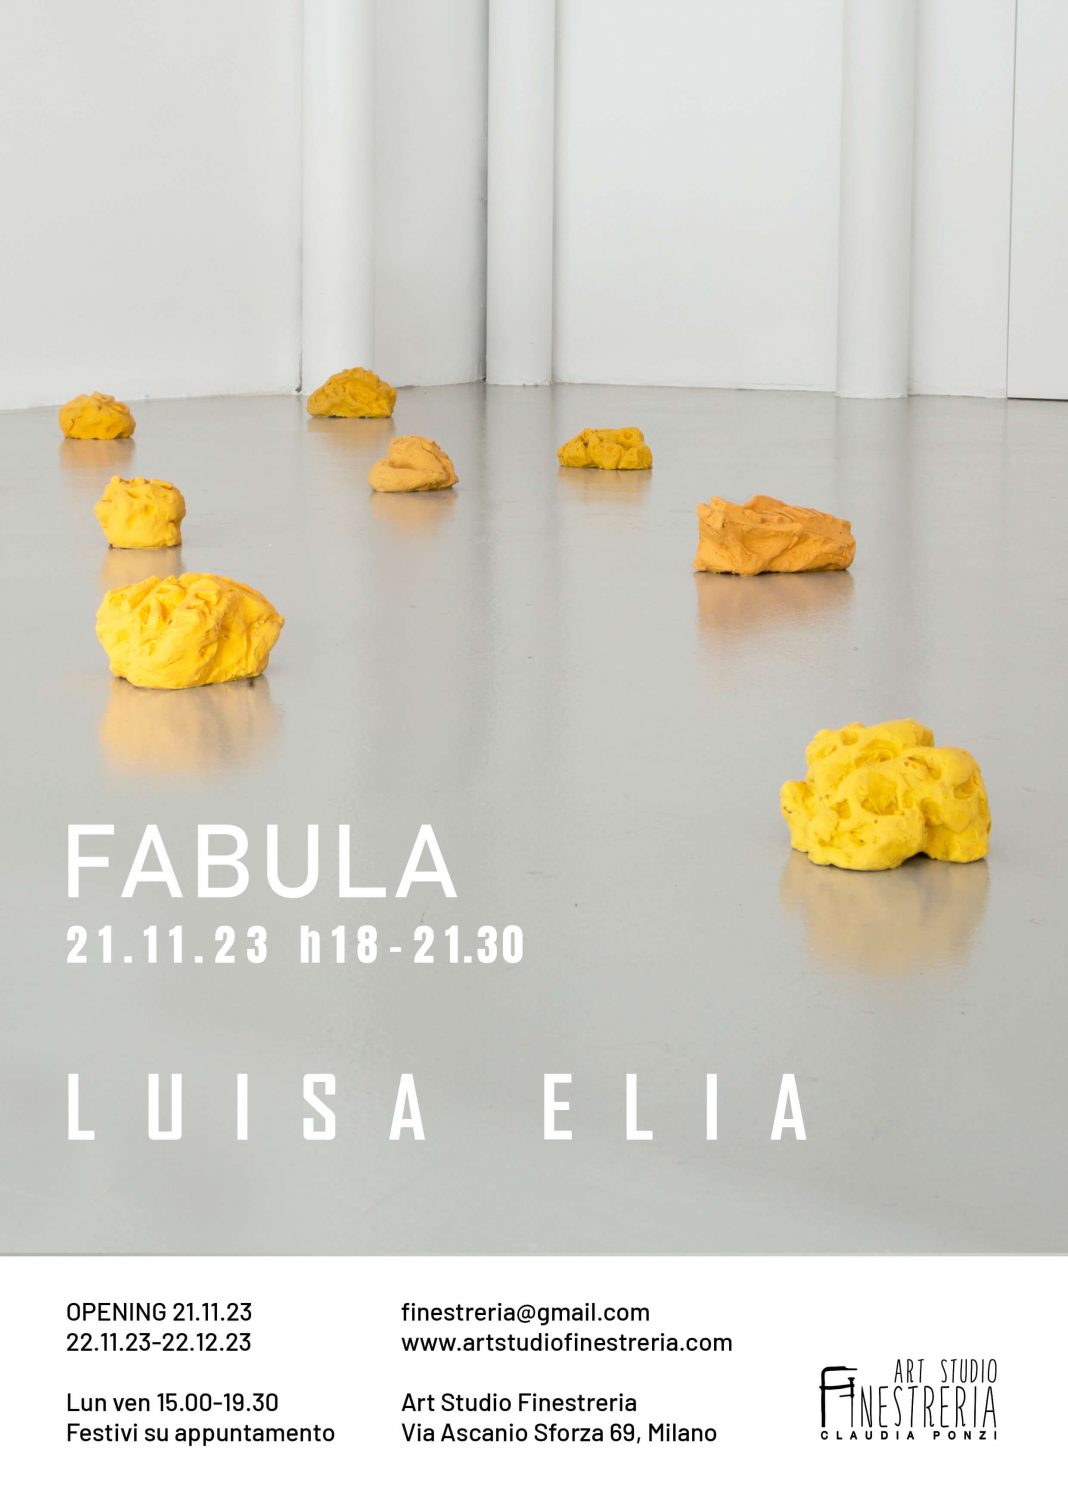 Fabulahttps://www.exibart.com/repository/media/formidable/11/img/1d2/Luisa-Elia-Art-Studio-Finestreria_verticale_legg-1068x1511.jpg